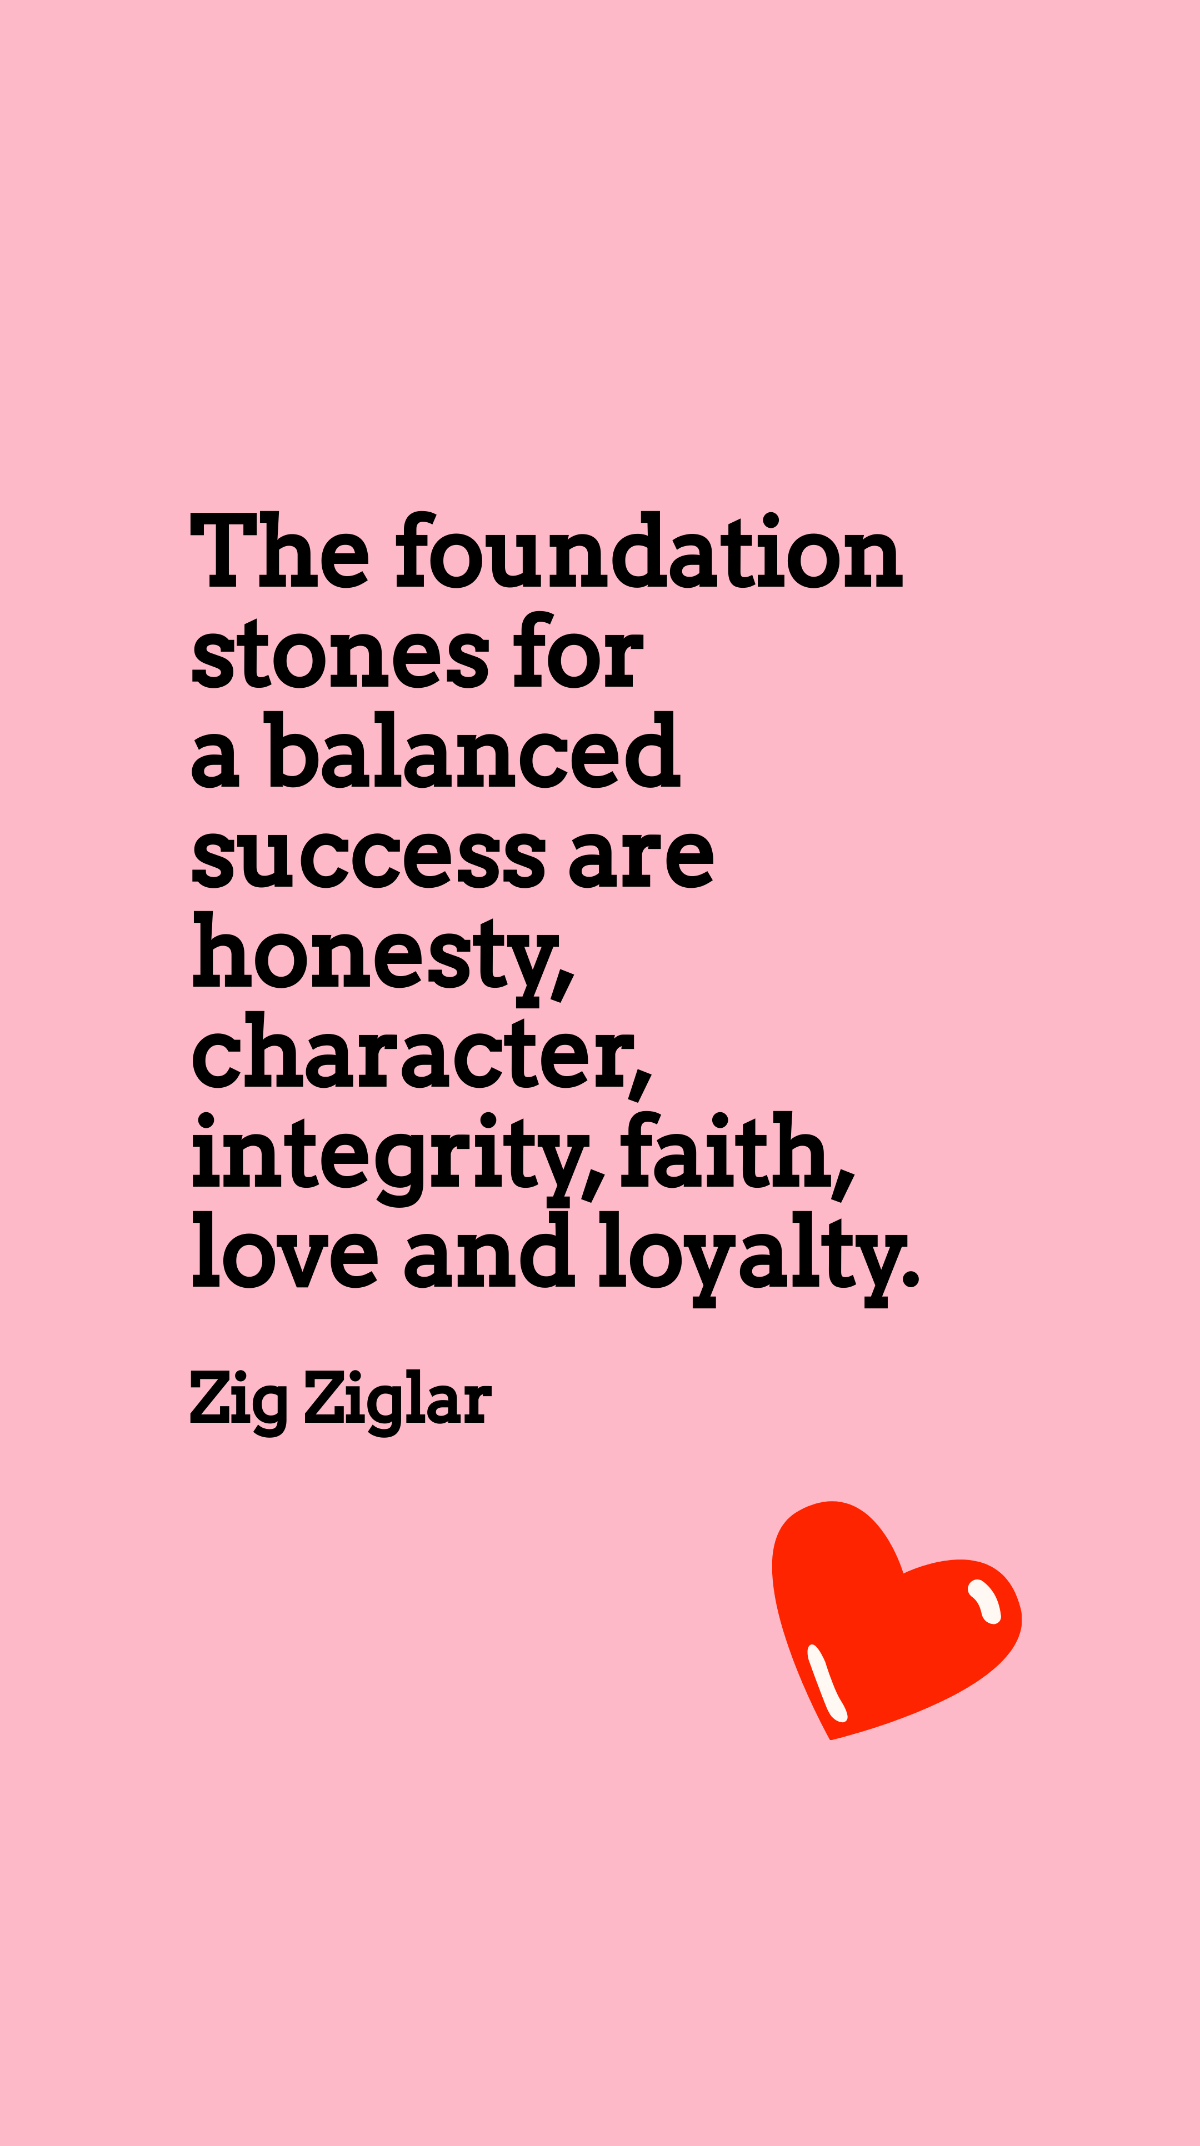 Zig Ziglar - The foundation stones for a balanced success are honesty, character, integrity, faith, love and loyalty.